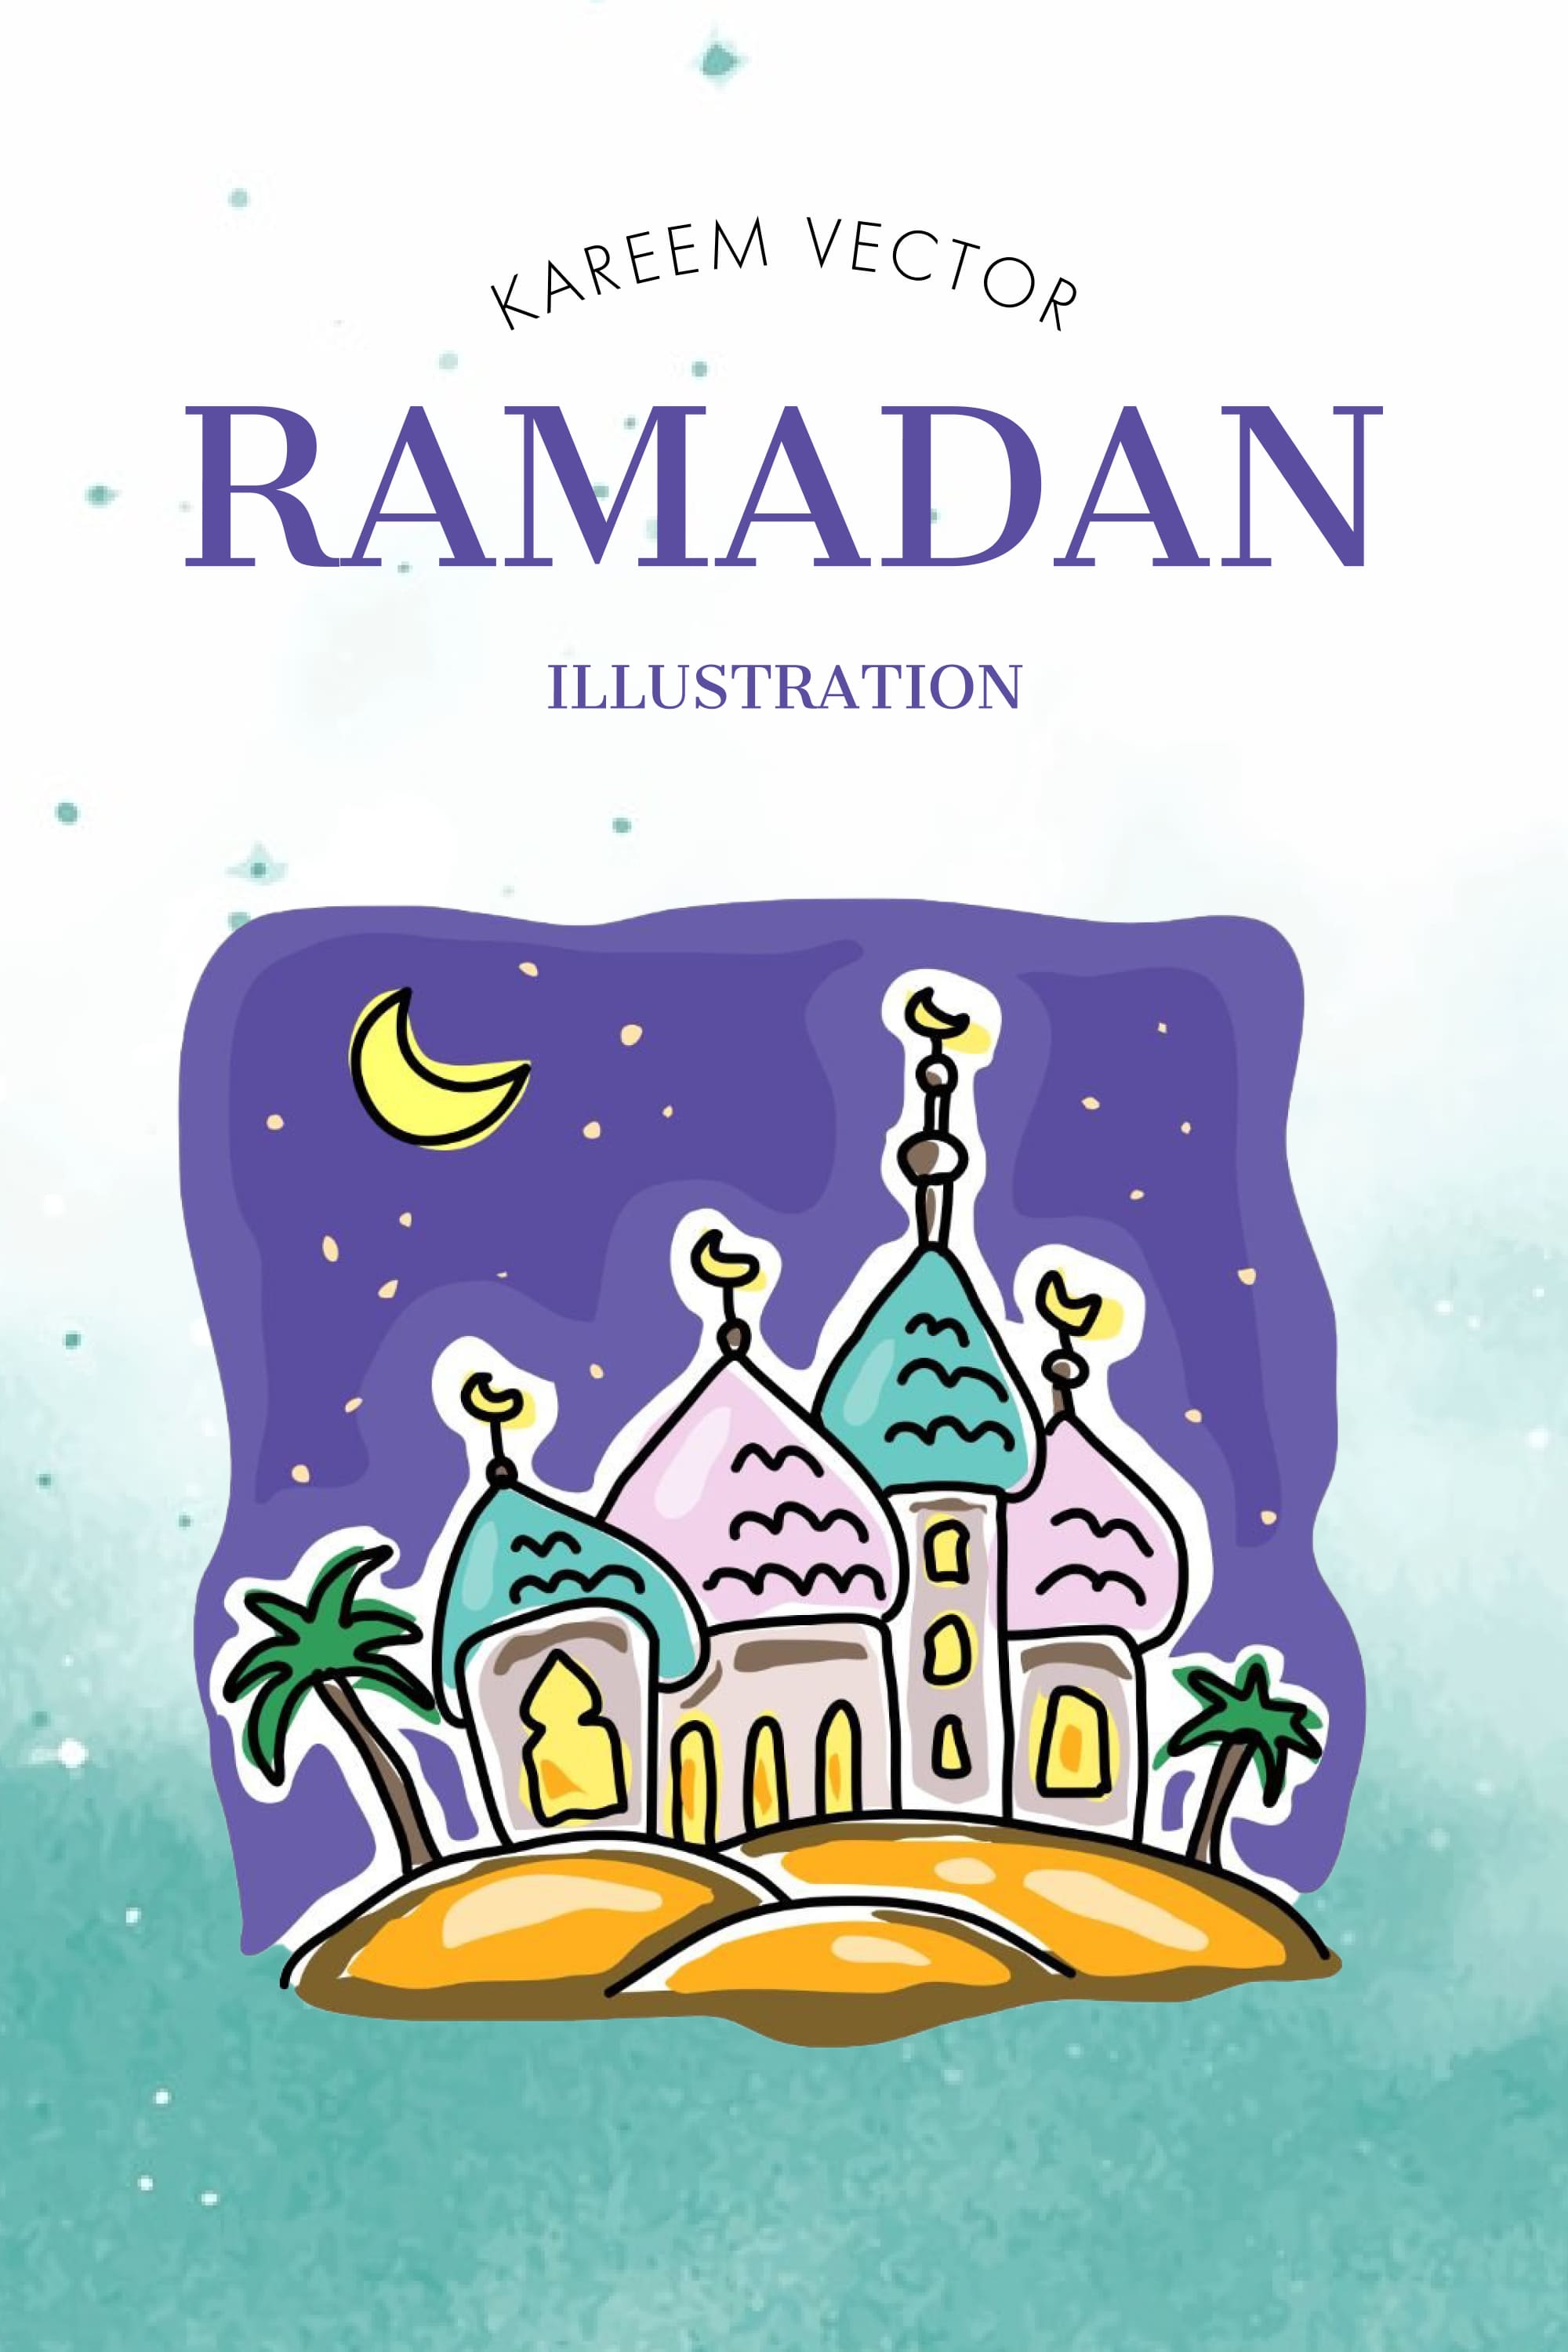 Ramadan kareem vector illustration of pinterest.